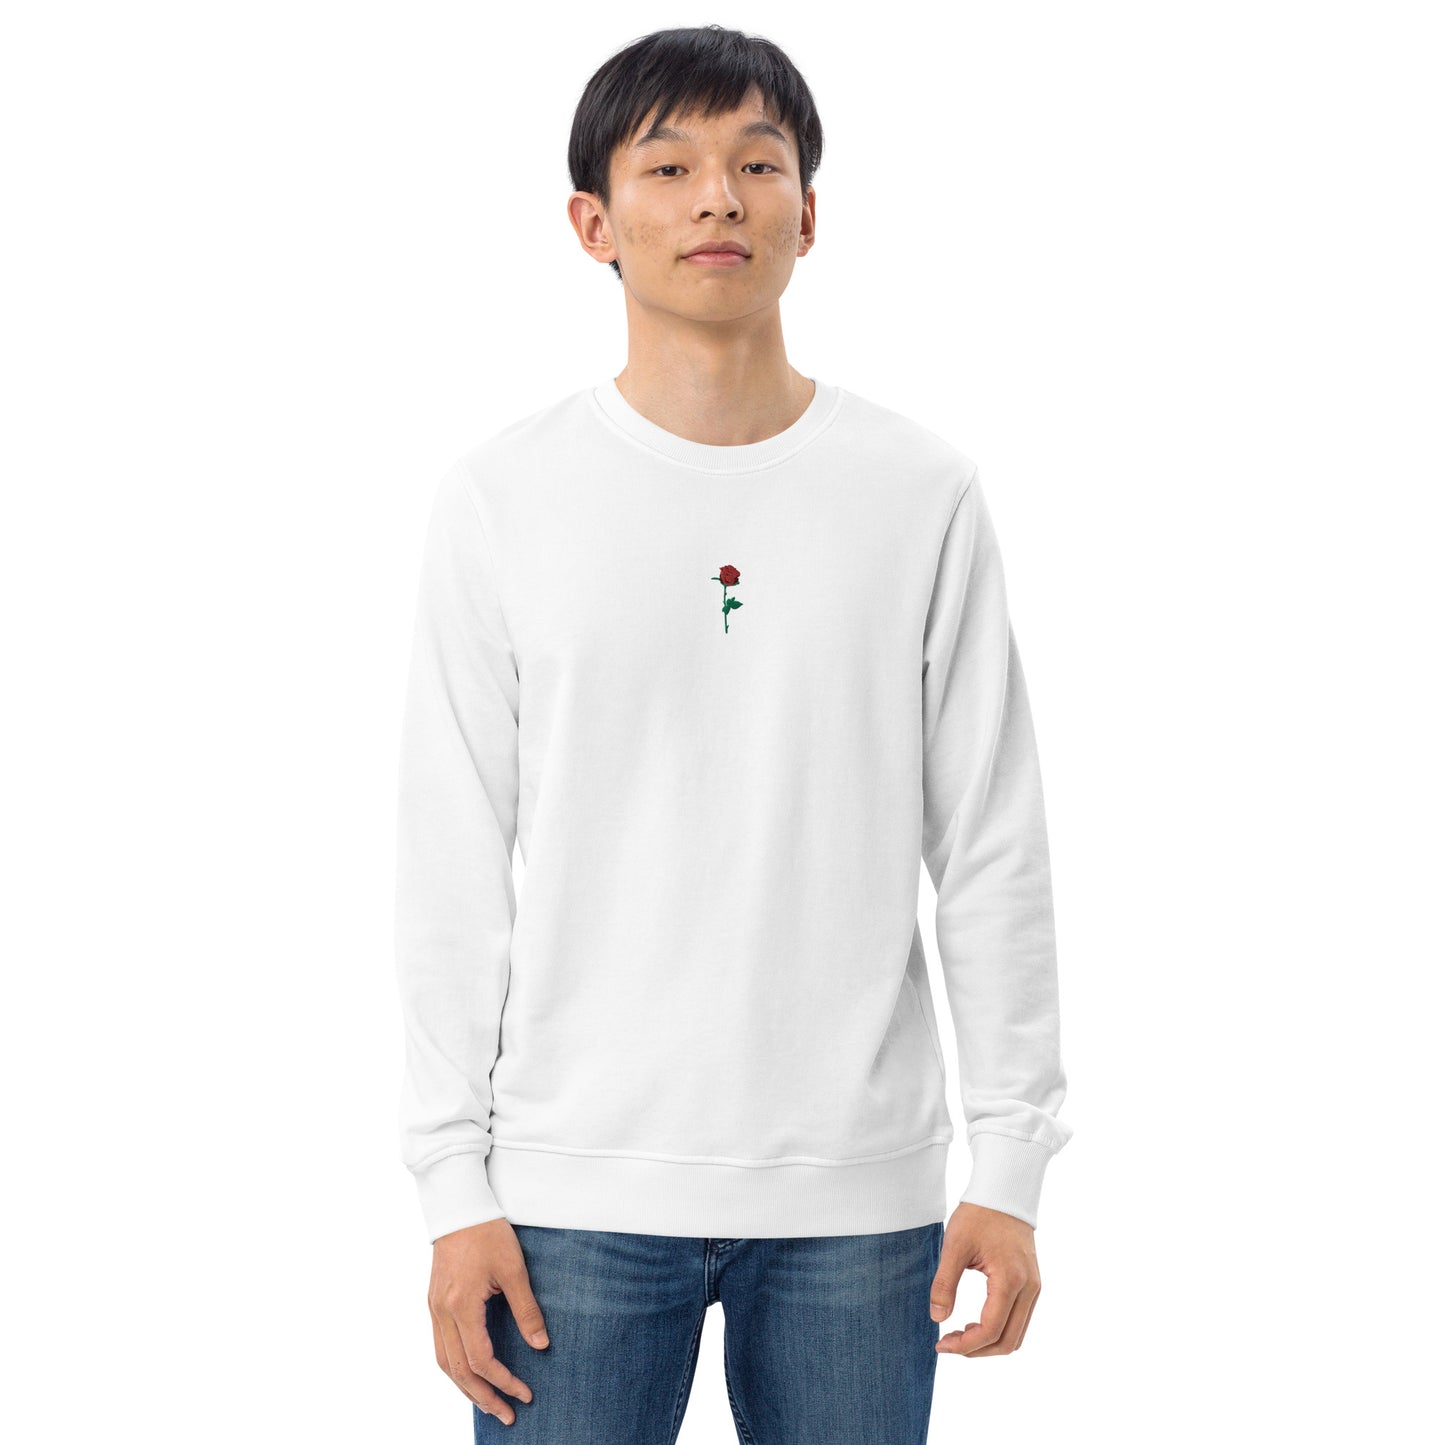 Adonis-Creations - Men's Organic Embroidered Cotton Sweatshirt